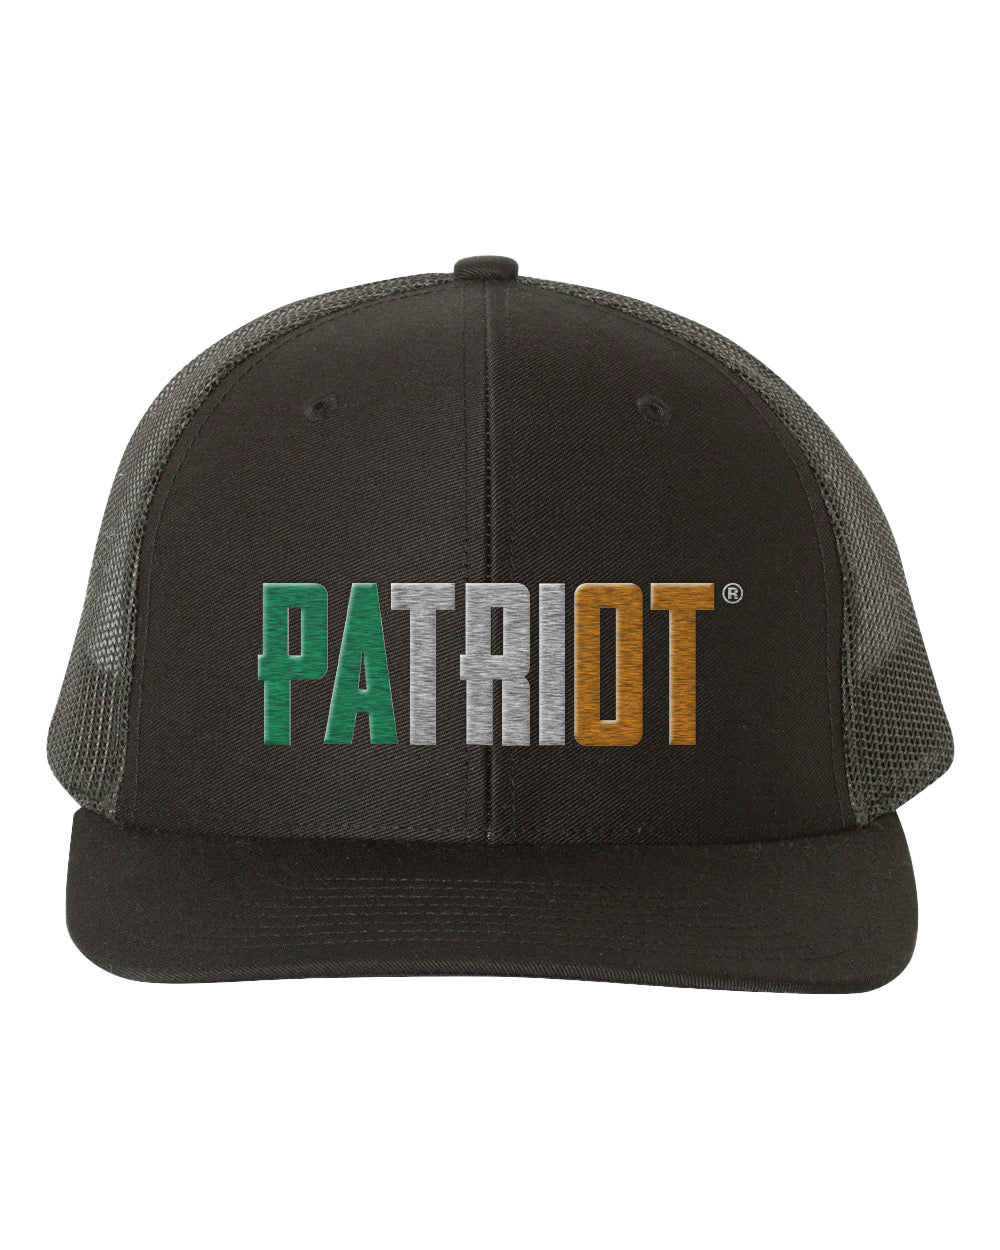 St. Paddys Patriot Hat